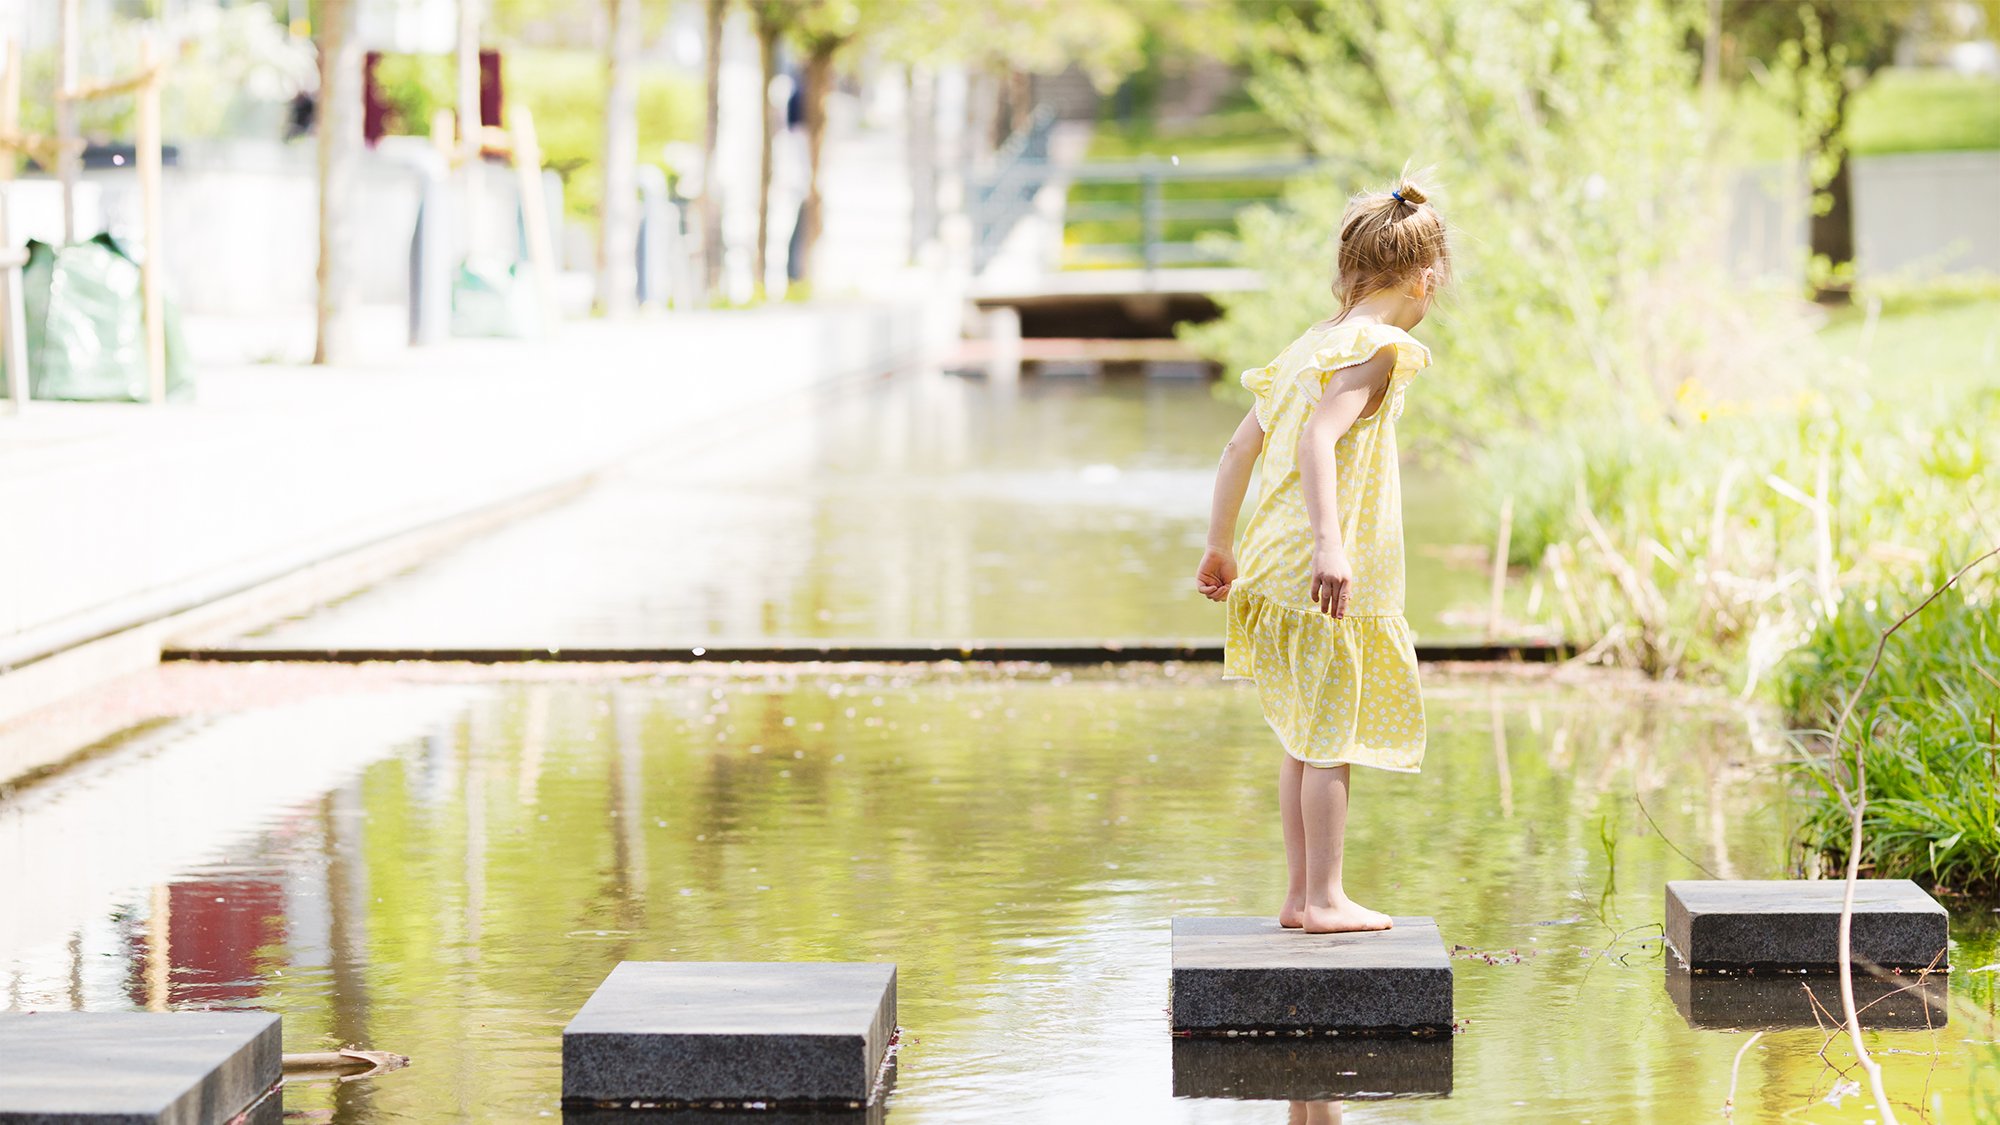 Child-friendly spaces make cities that work better for everyone. Photo:  juninatt, Shutterstock